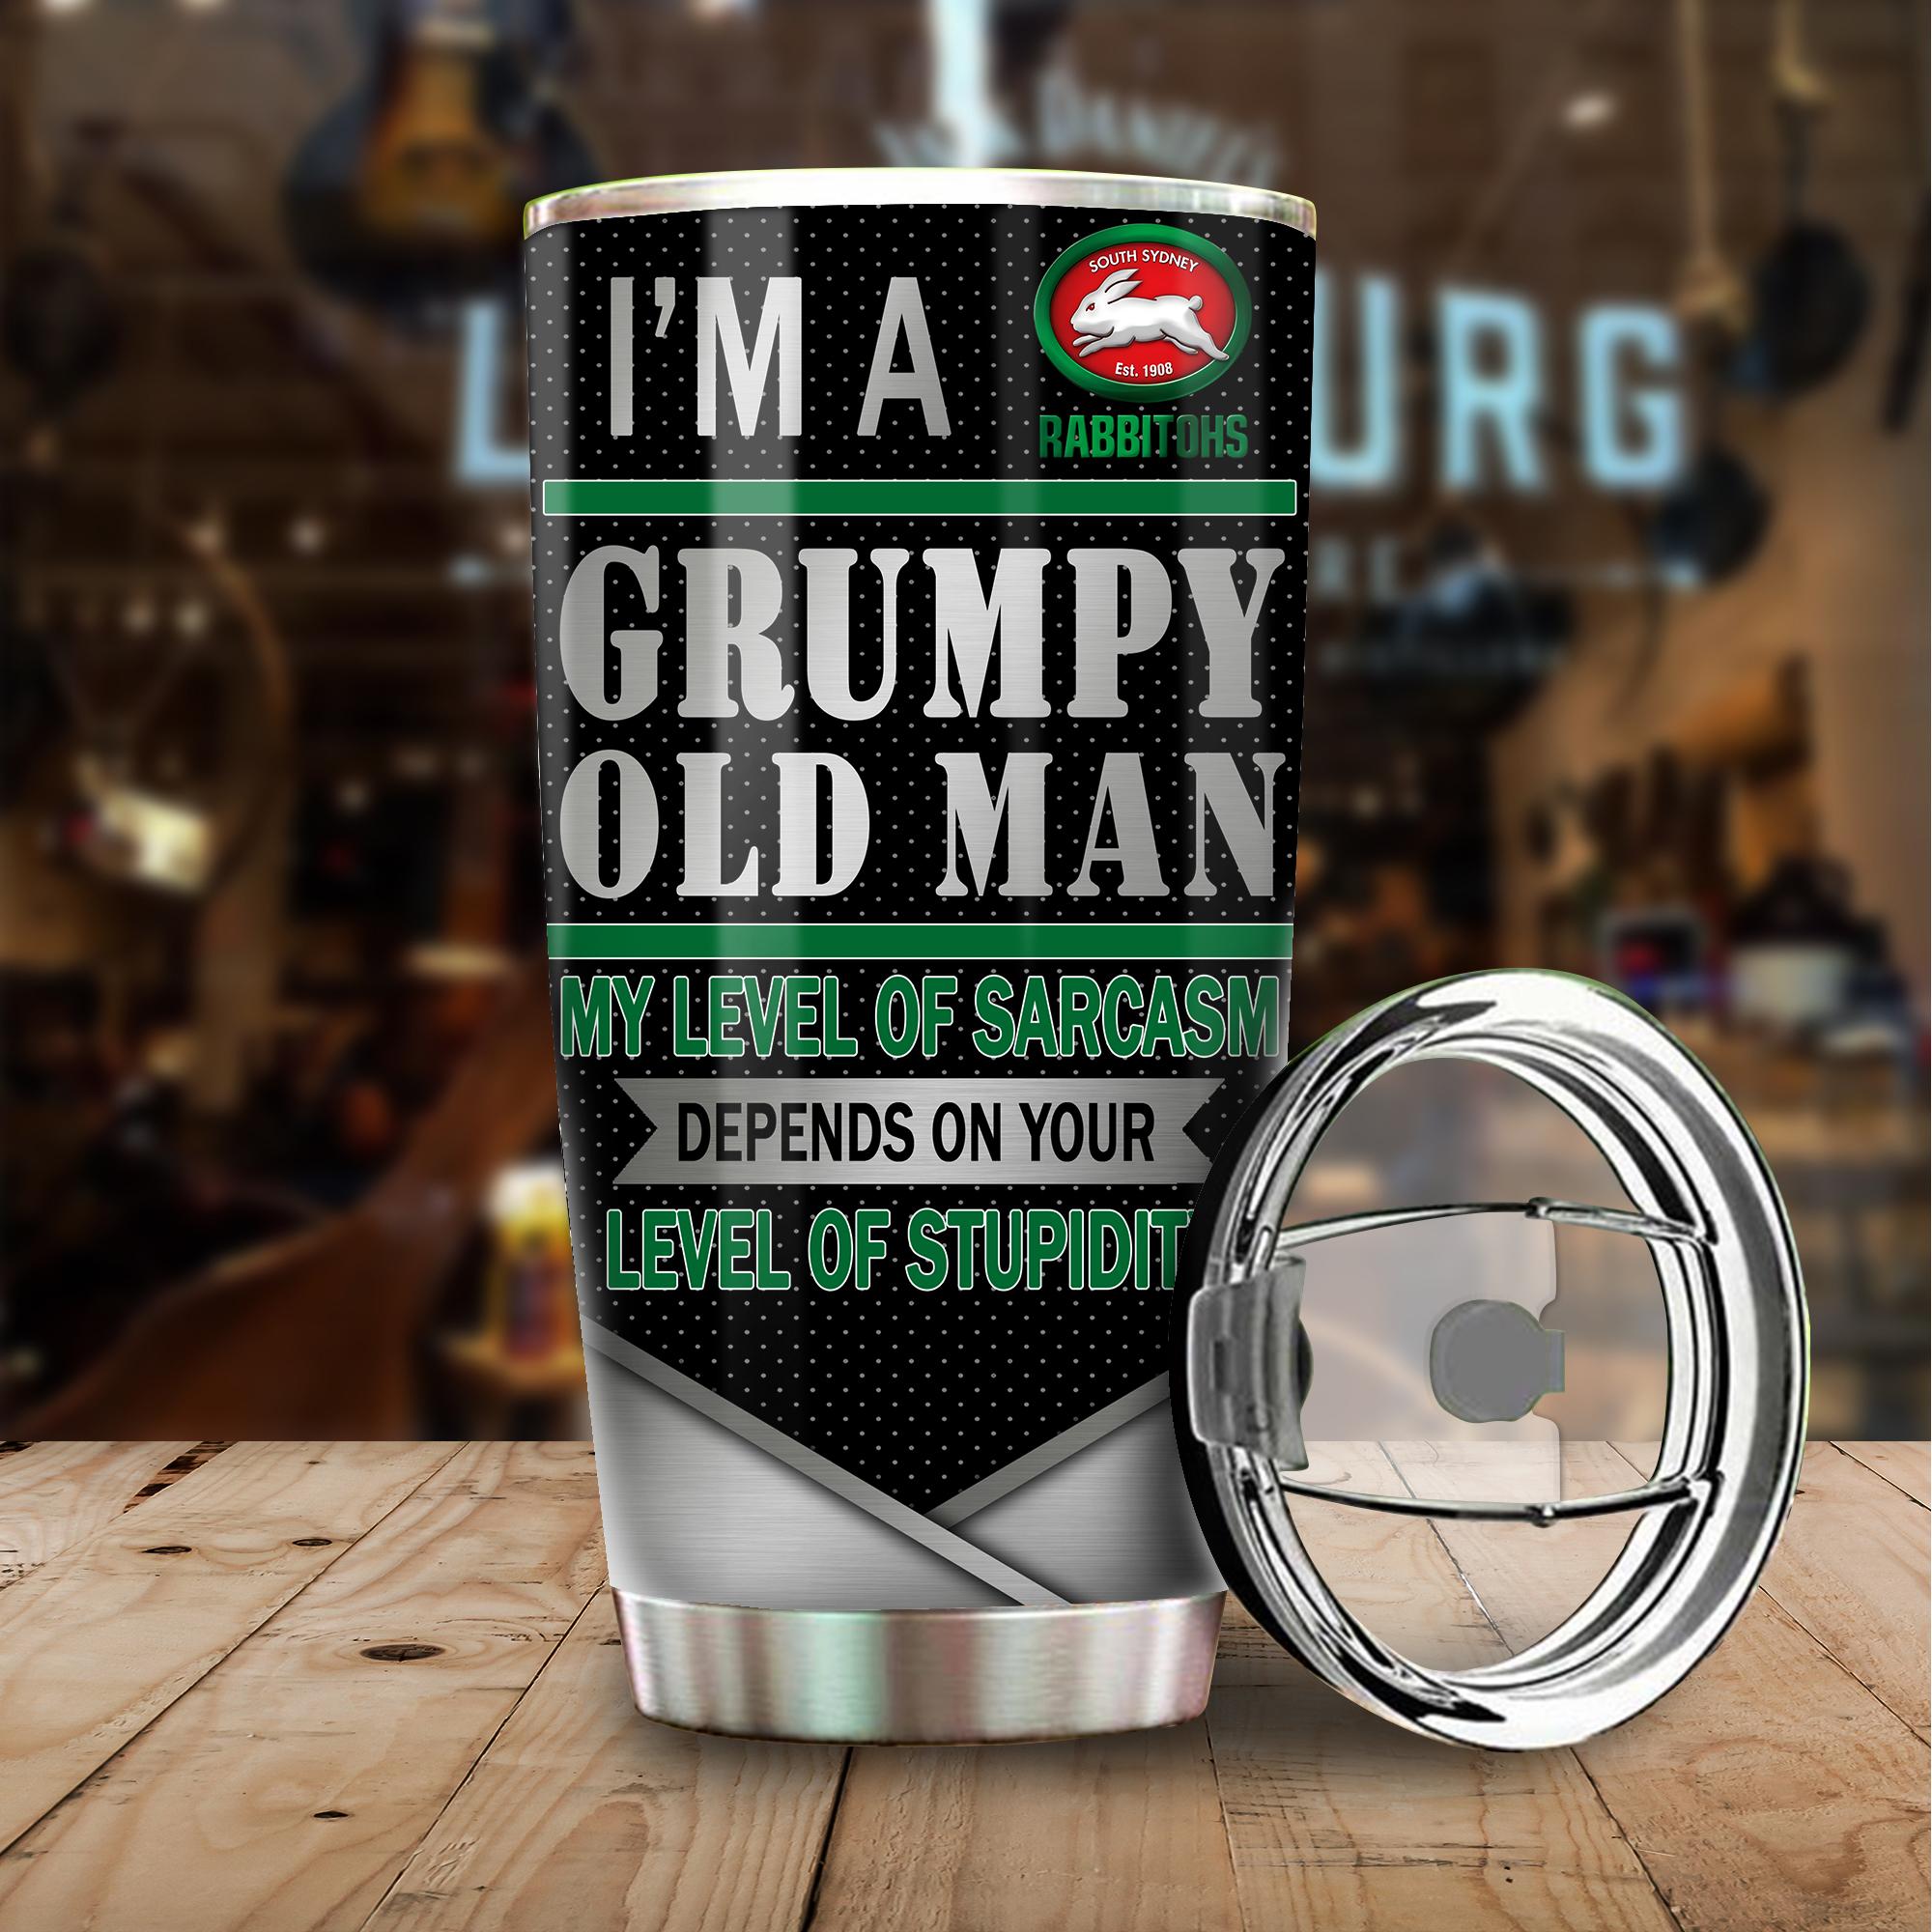 South Sydney Rabbitohs I’m A Grumpy Old Man Custom Name Tumbler Cup